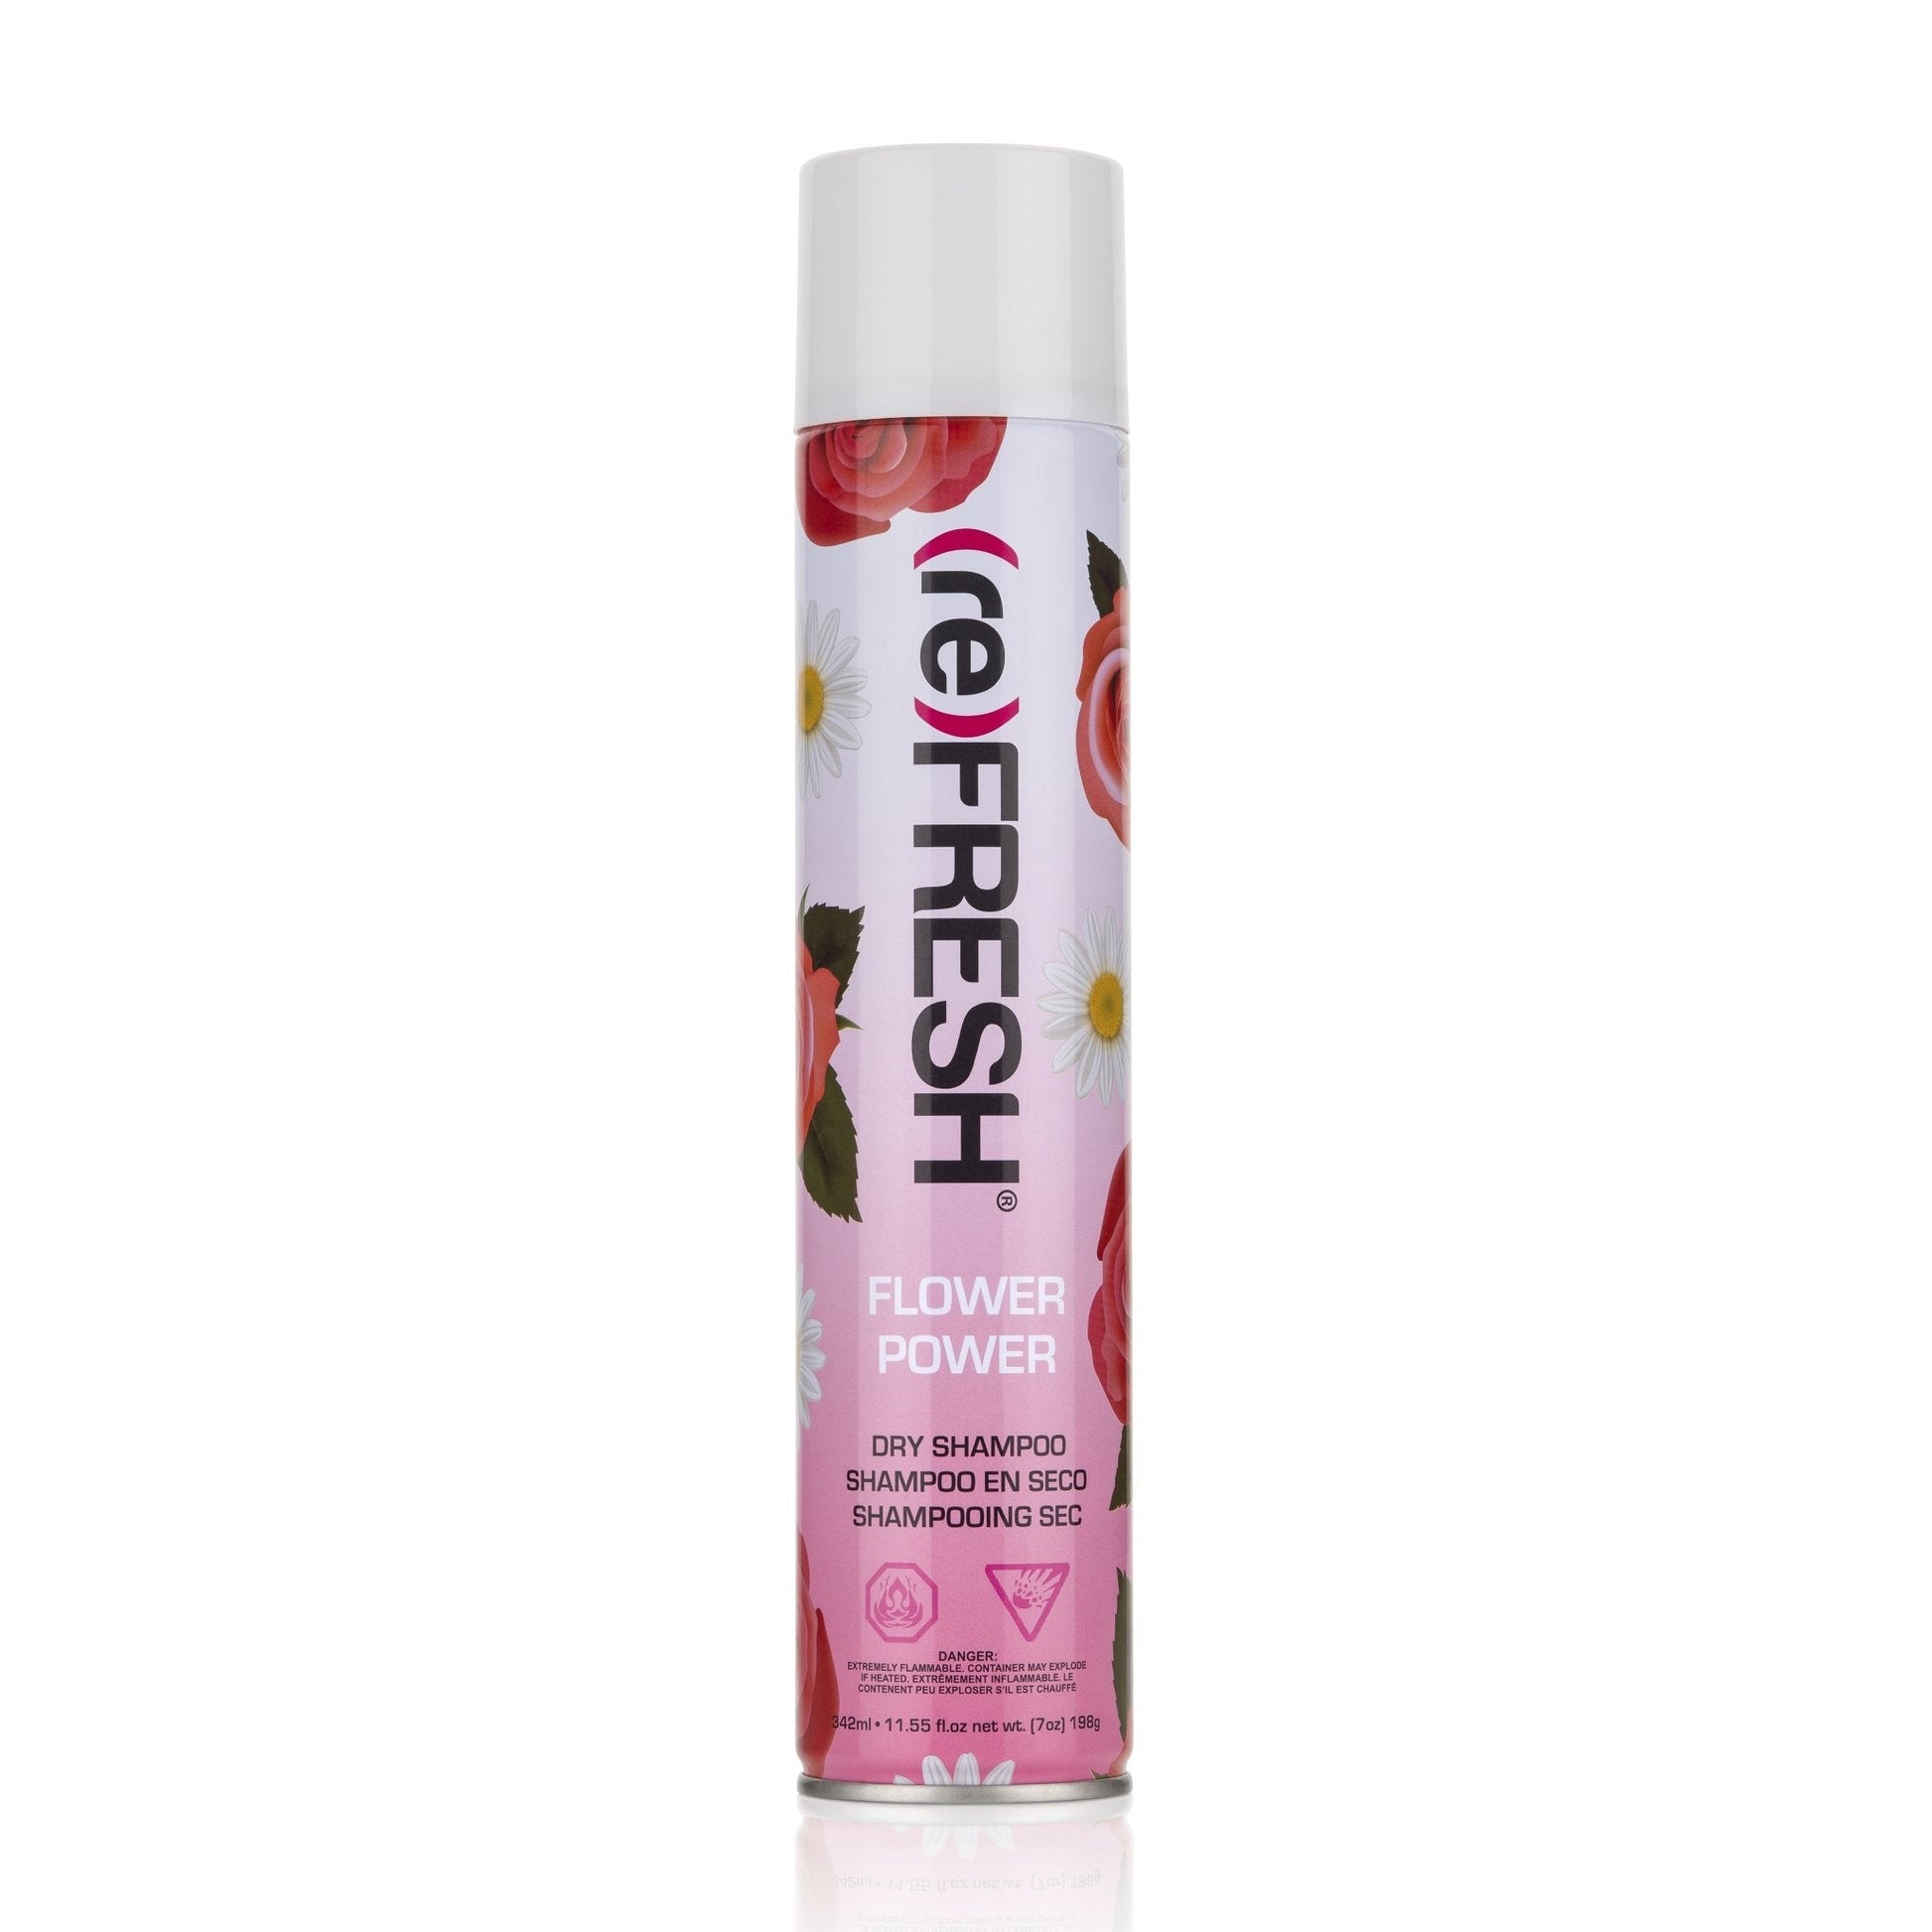 REFRESH FLOWER POWER DRY SHAMPOO 342ML - Kosmetica